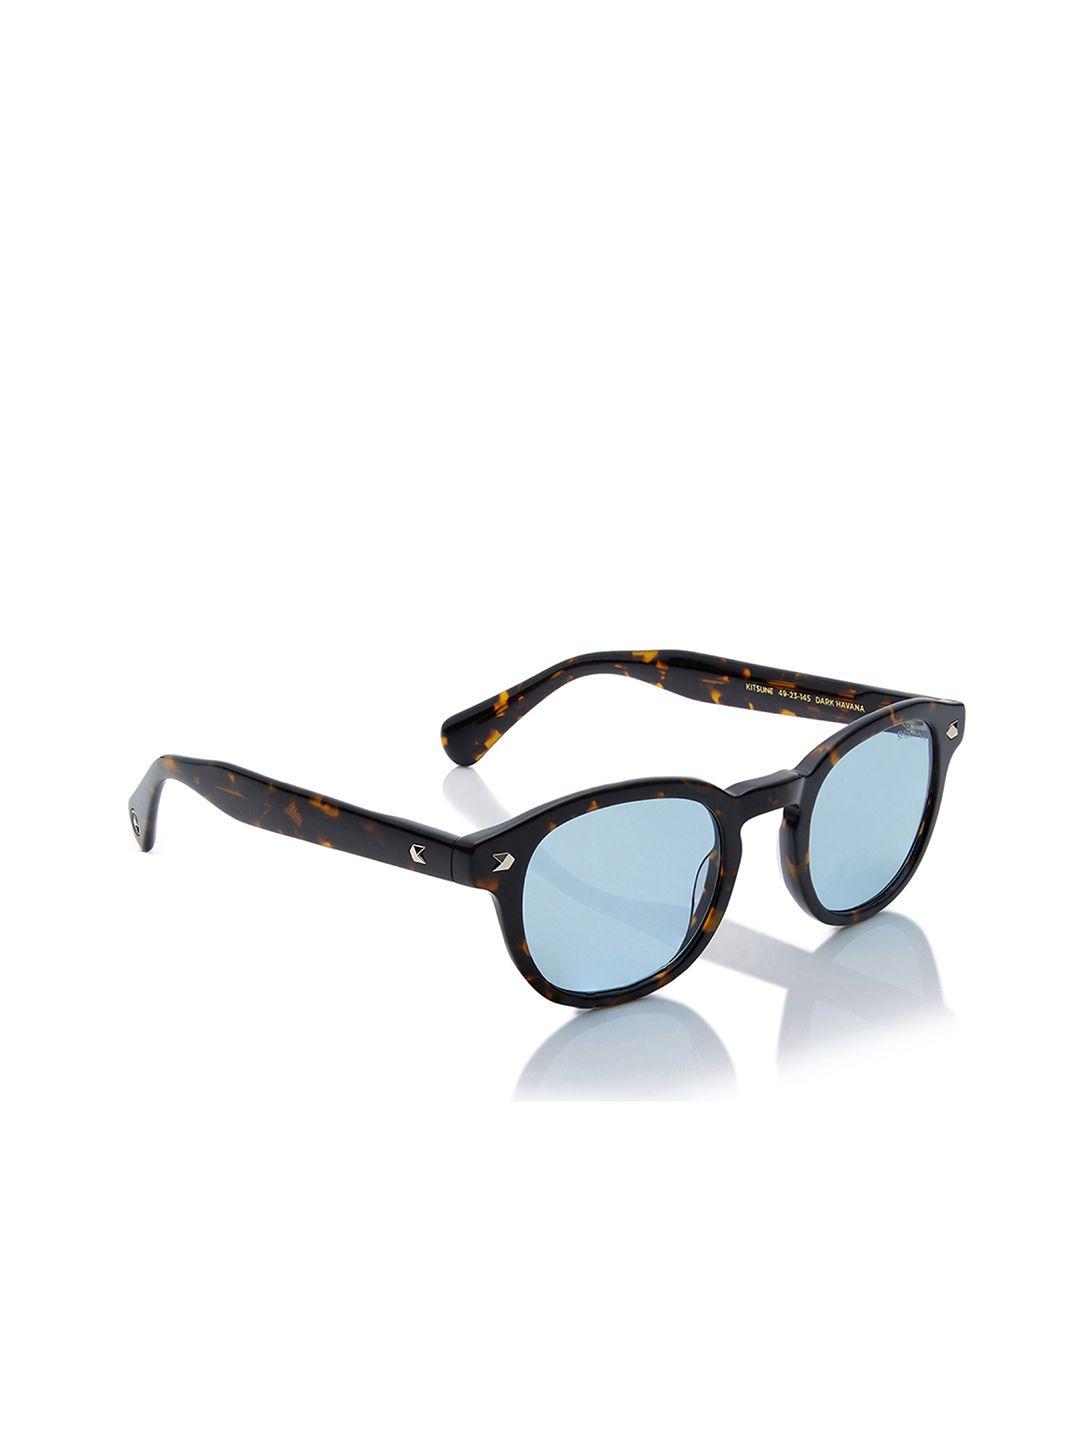 shisen fox unisex round sunglasses with uv protected lens sg030